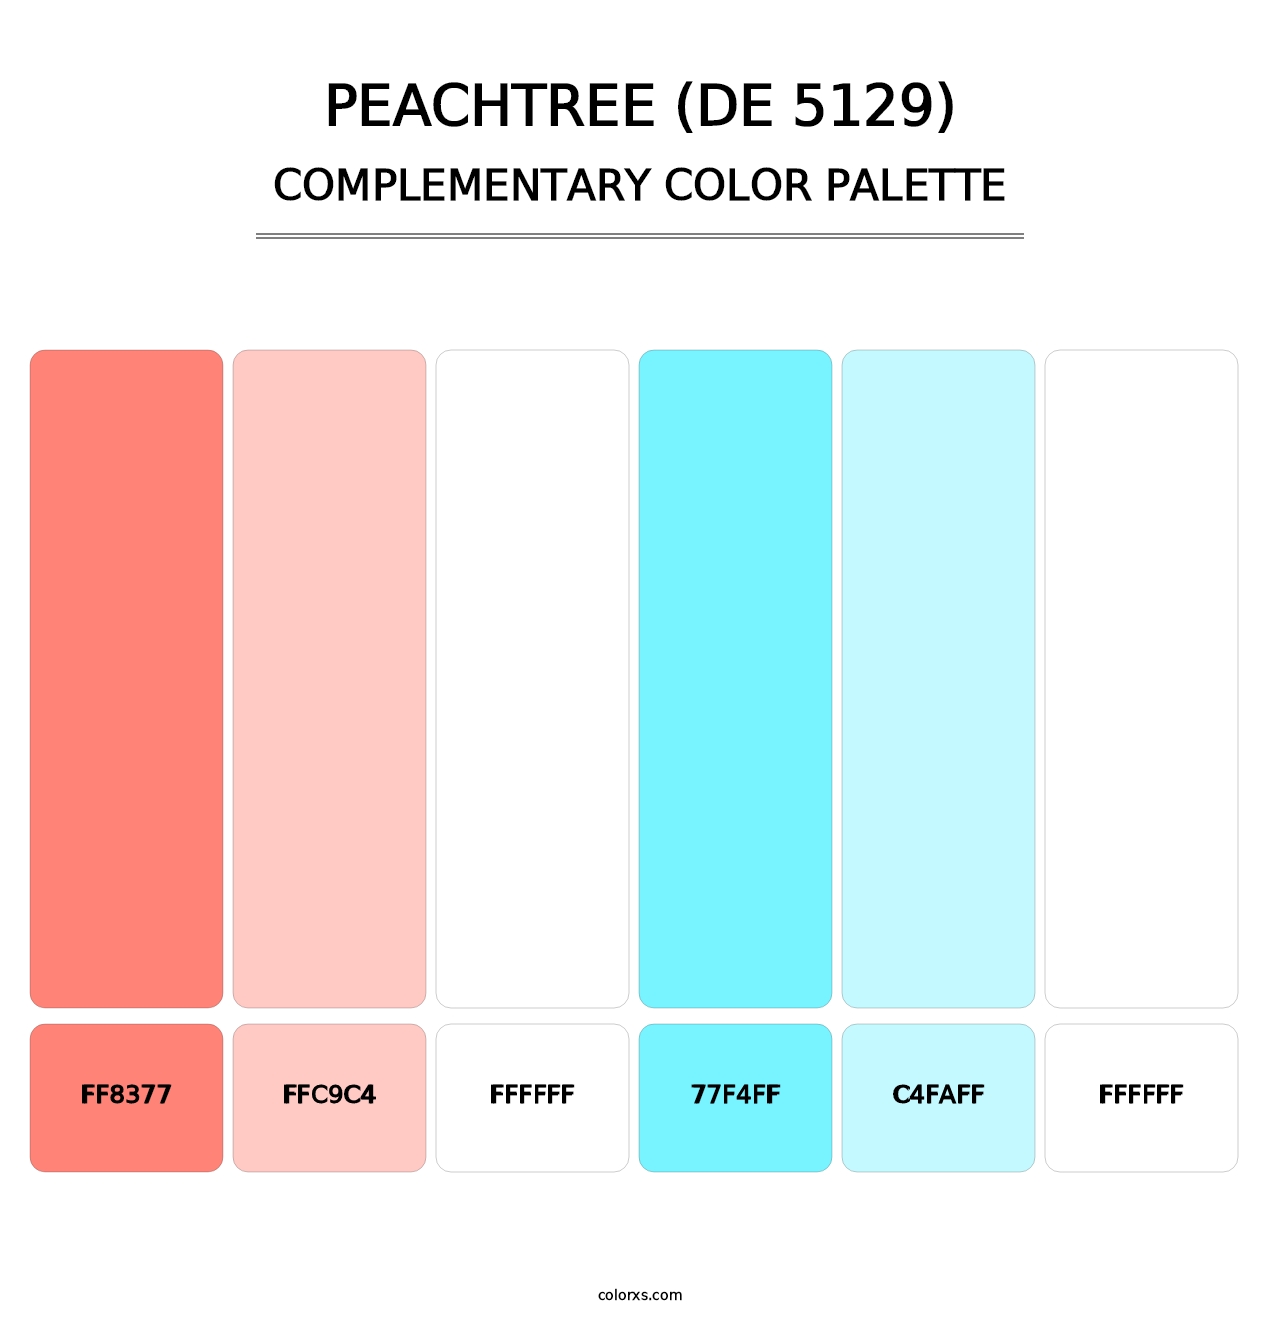 Peachtree (DE 5129) - Complementary Color Palette